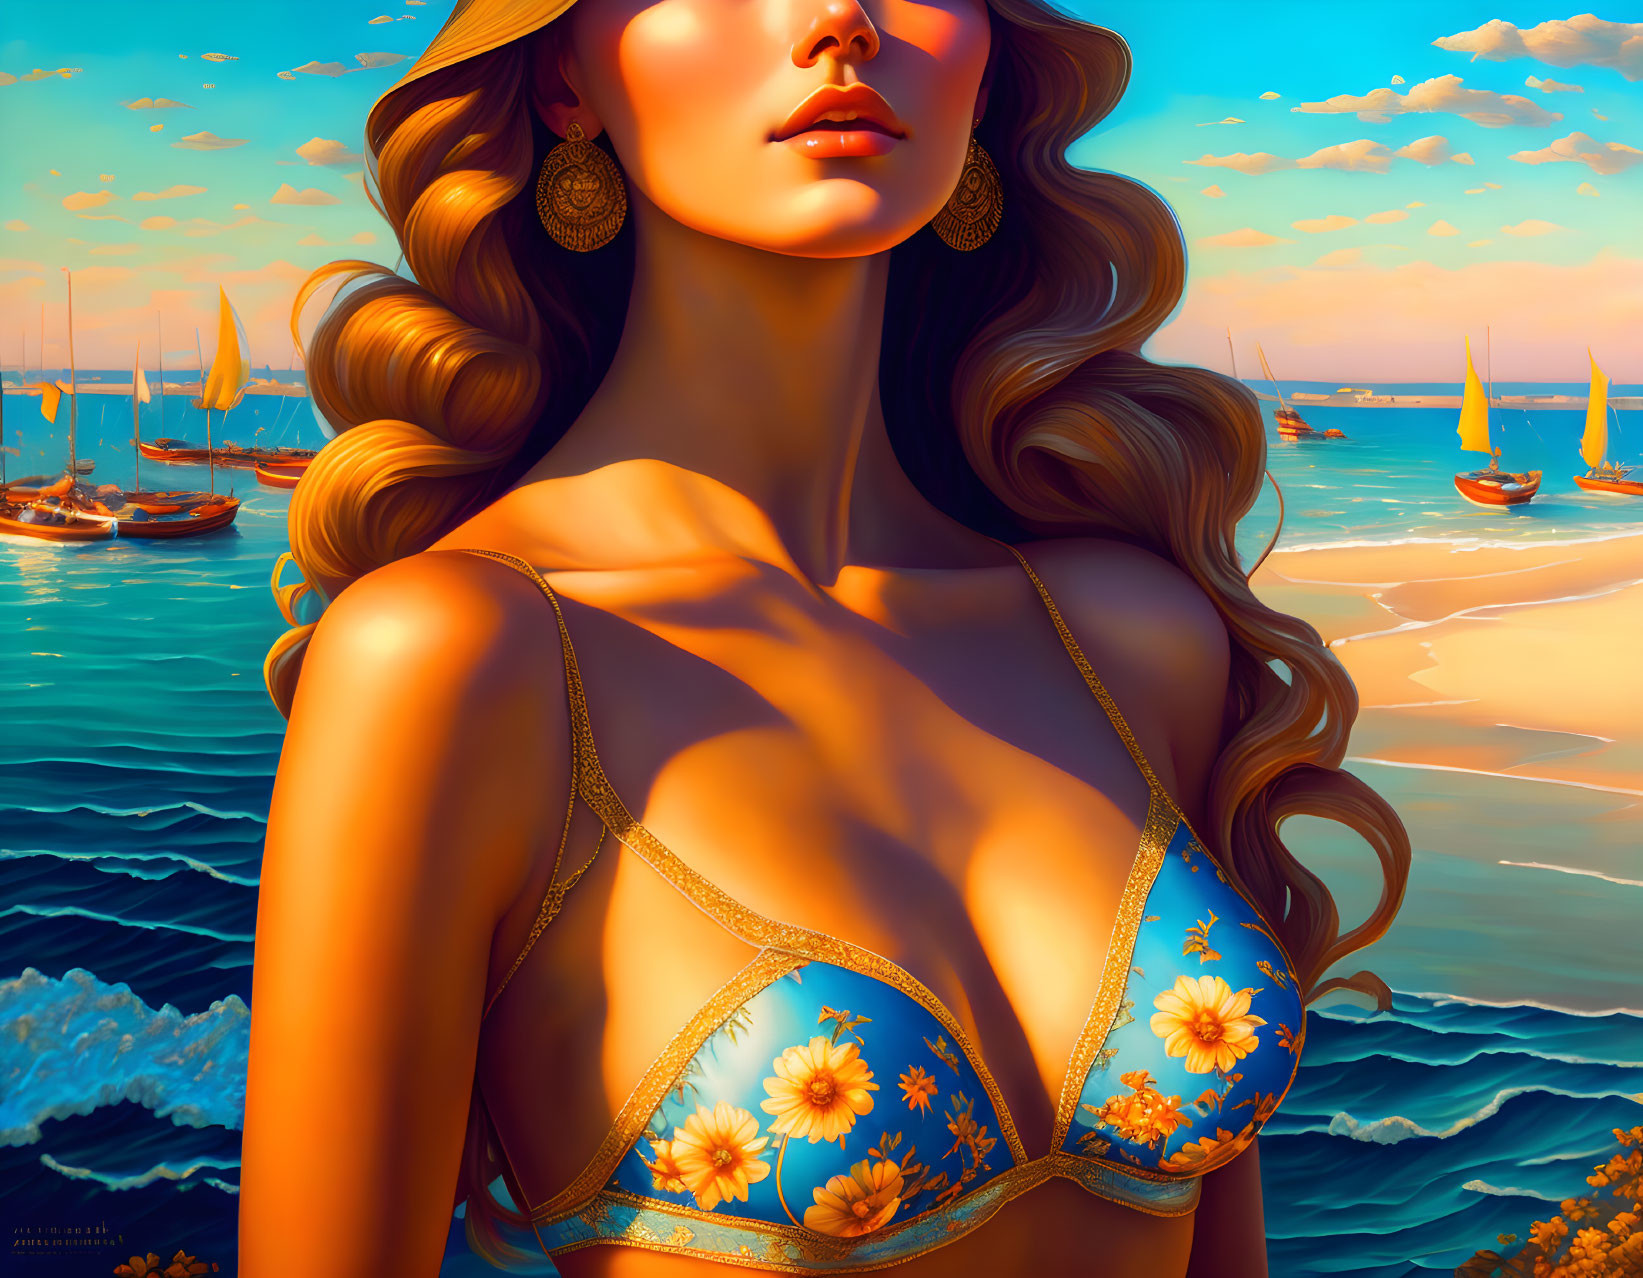 Girl in a bikini in the style of Alphonse Mucha